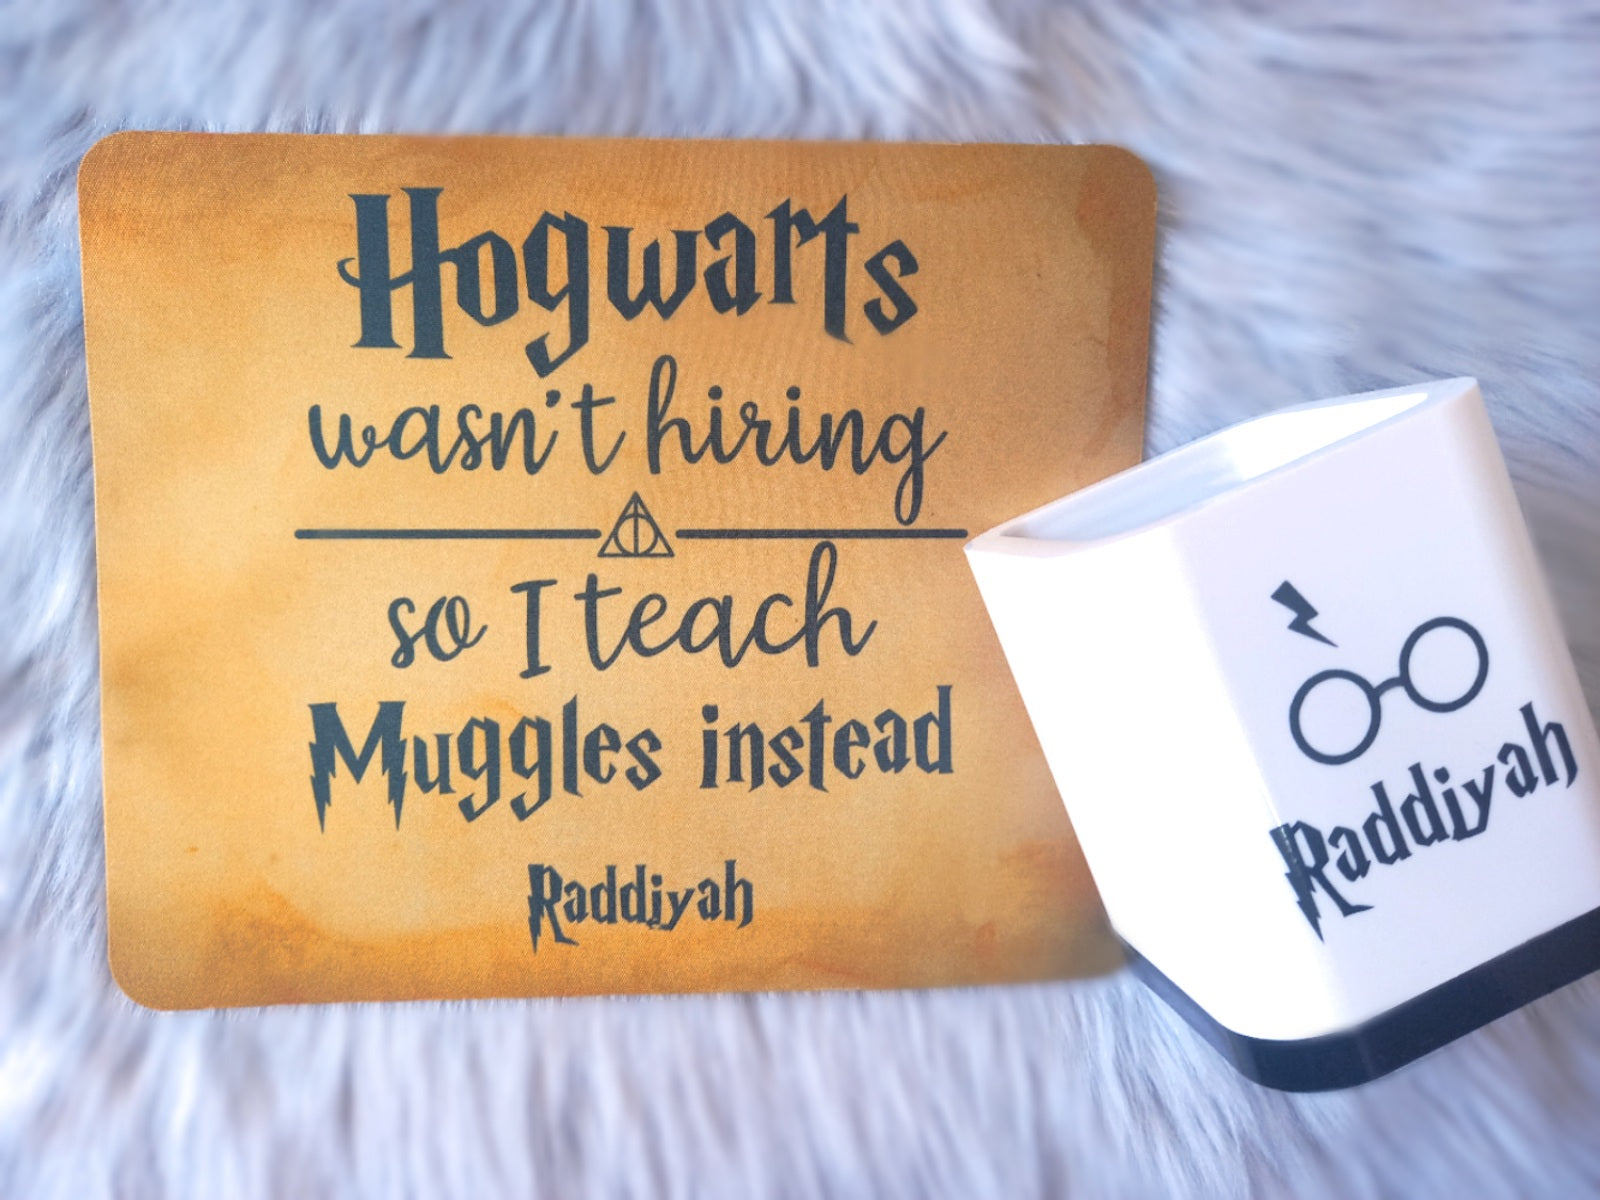 Hogwarts wasn't hiring so i teach muggles instead - mouspad